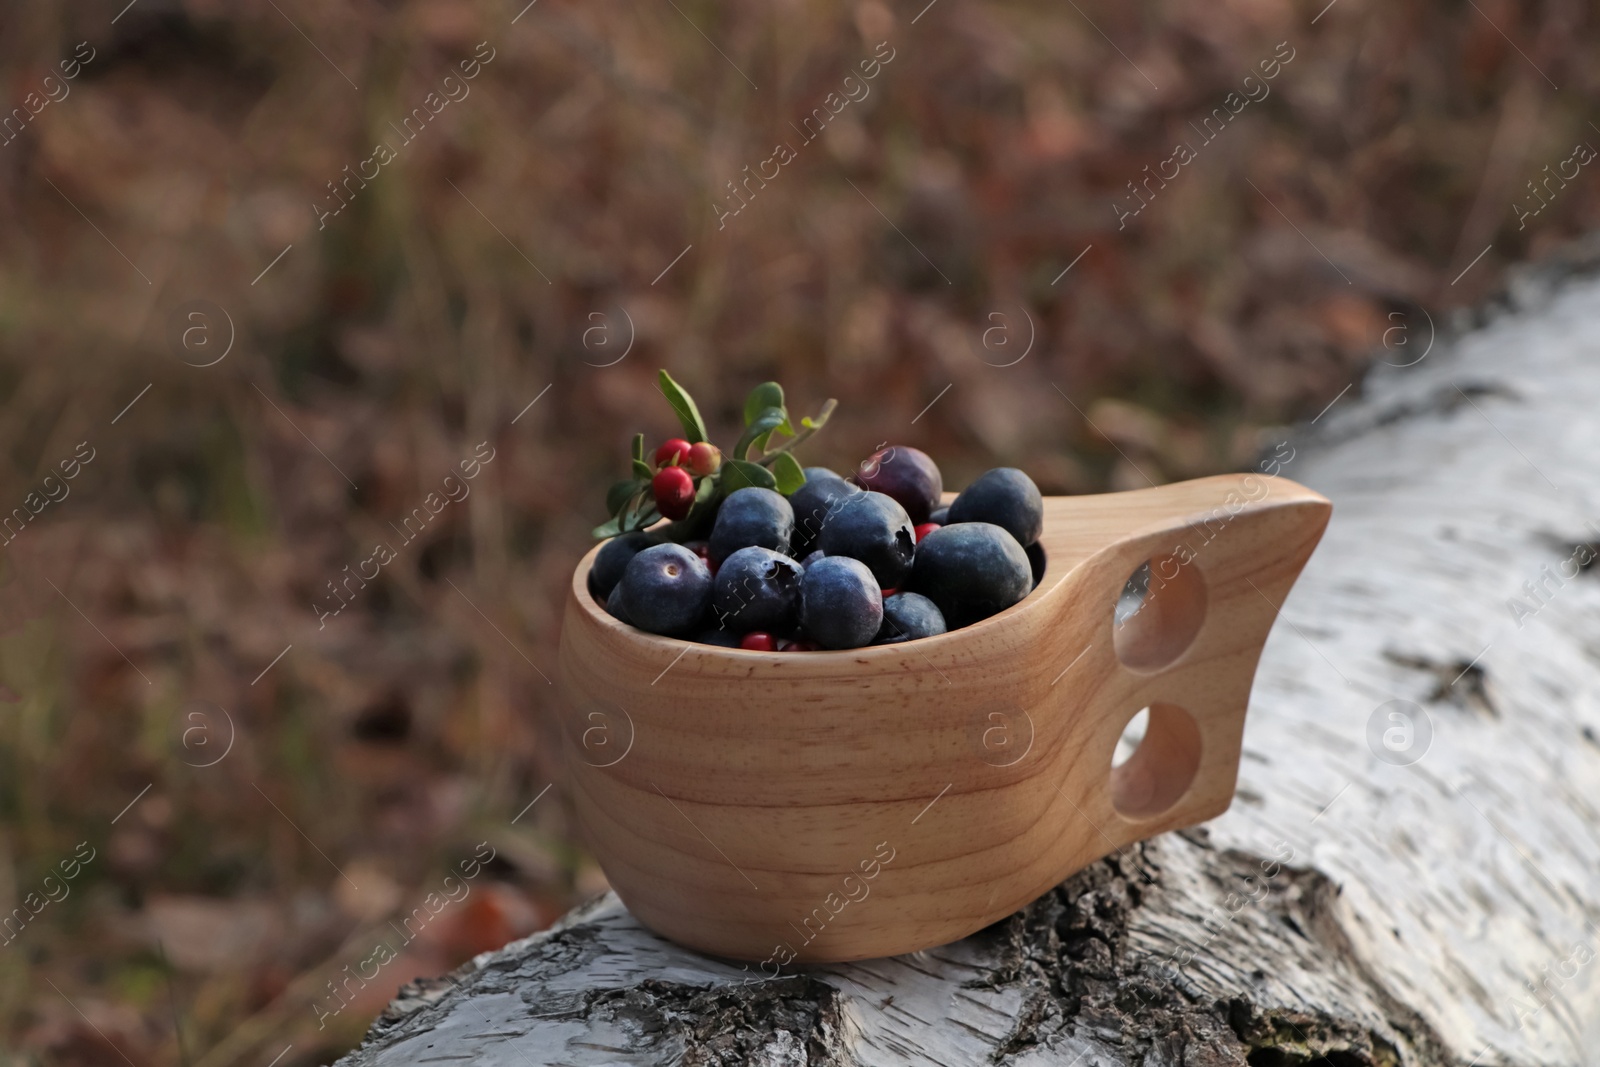 Photo of Wooden mug full of fresh ripe blueberries and lingonberries on log in forest